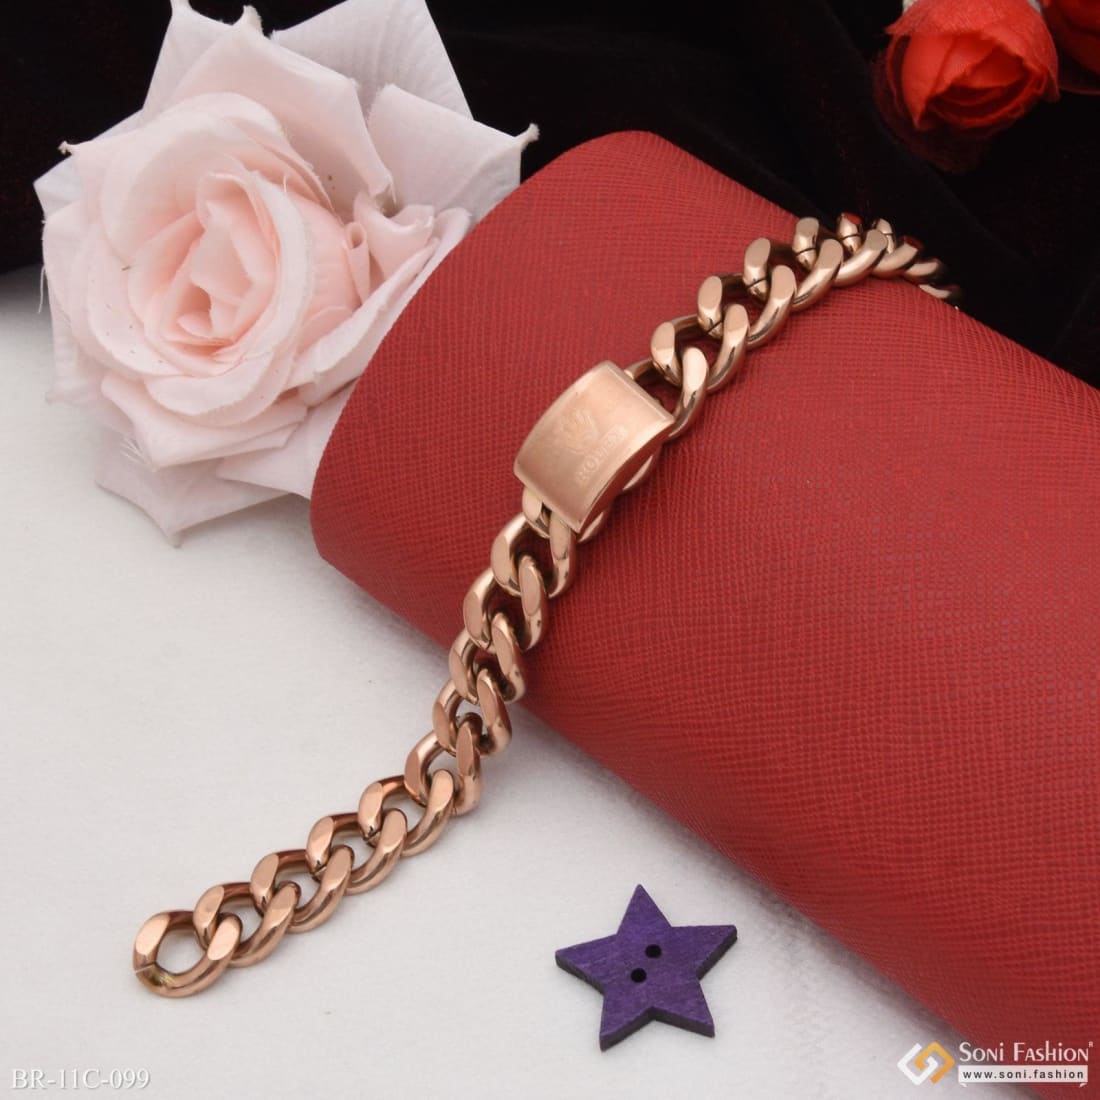 14K Rose Gold Bujukan Split Cuff Bracelet with Diamond Pavé Bar - Paul's  Jewelry-Jewelry is Personal.